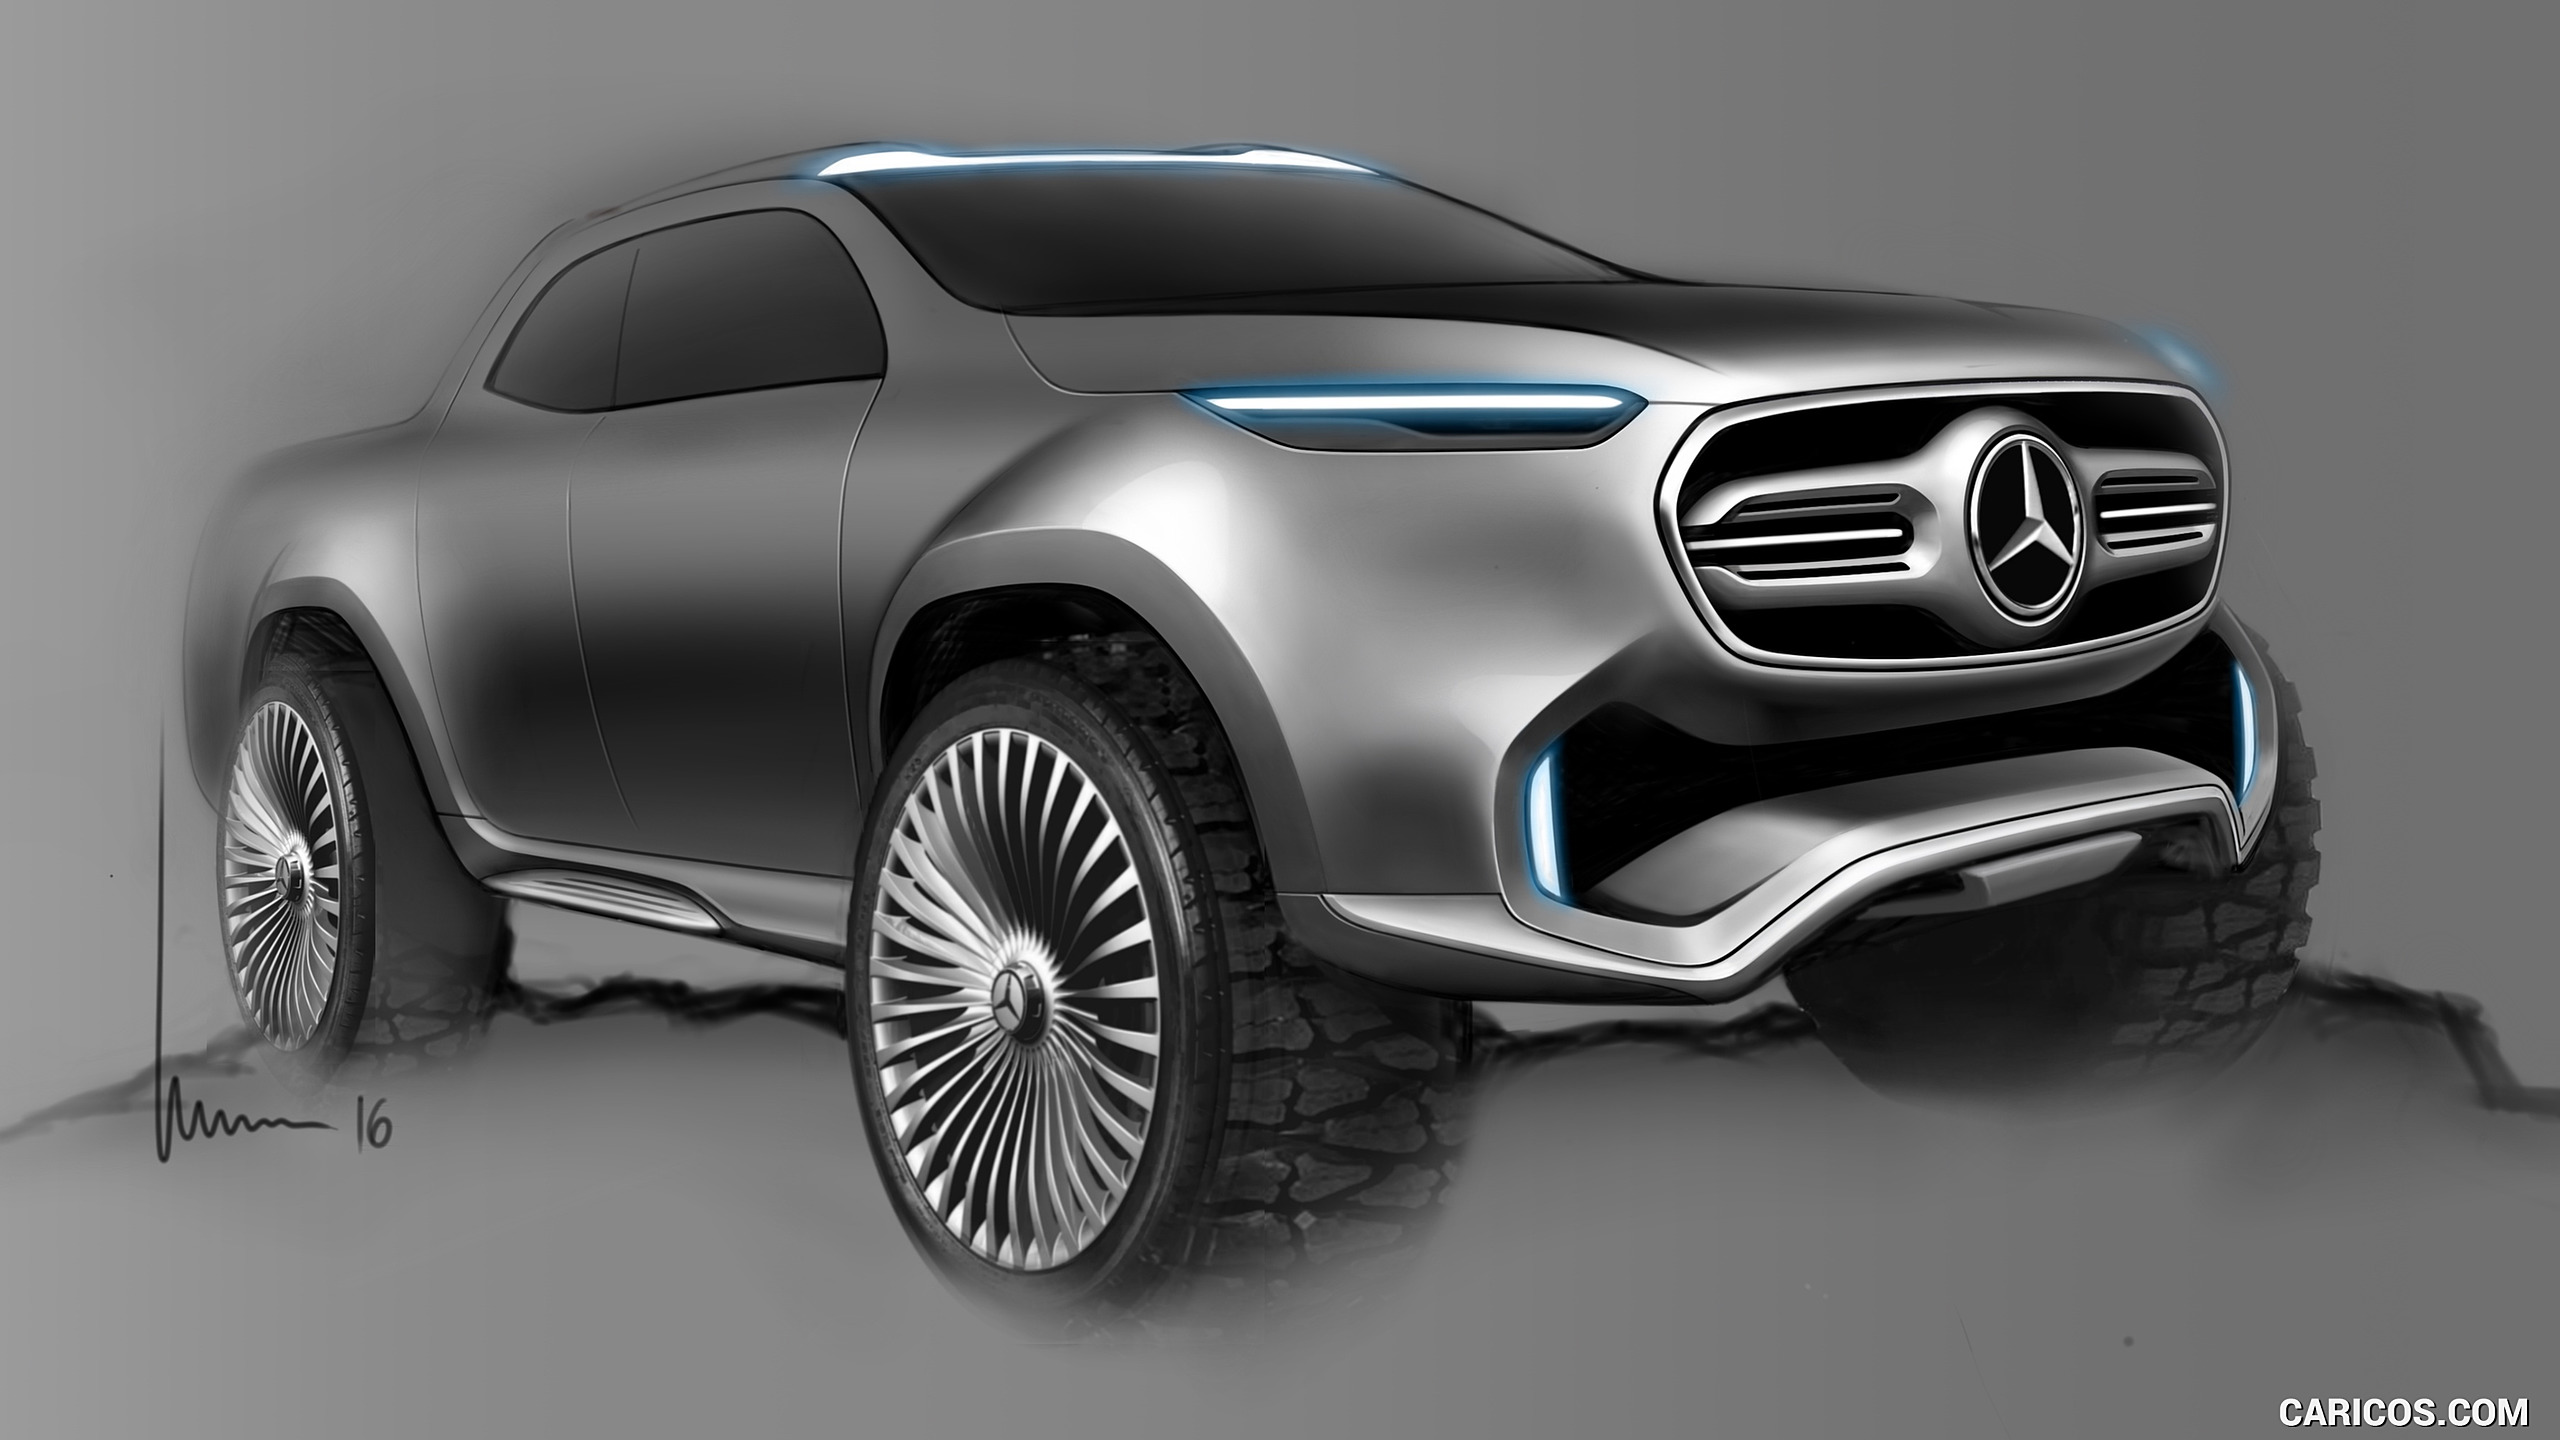 2016 Mercedes-Benz X-Class Pickup Concept - Design Sketch, #27 of 29